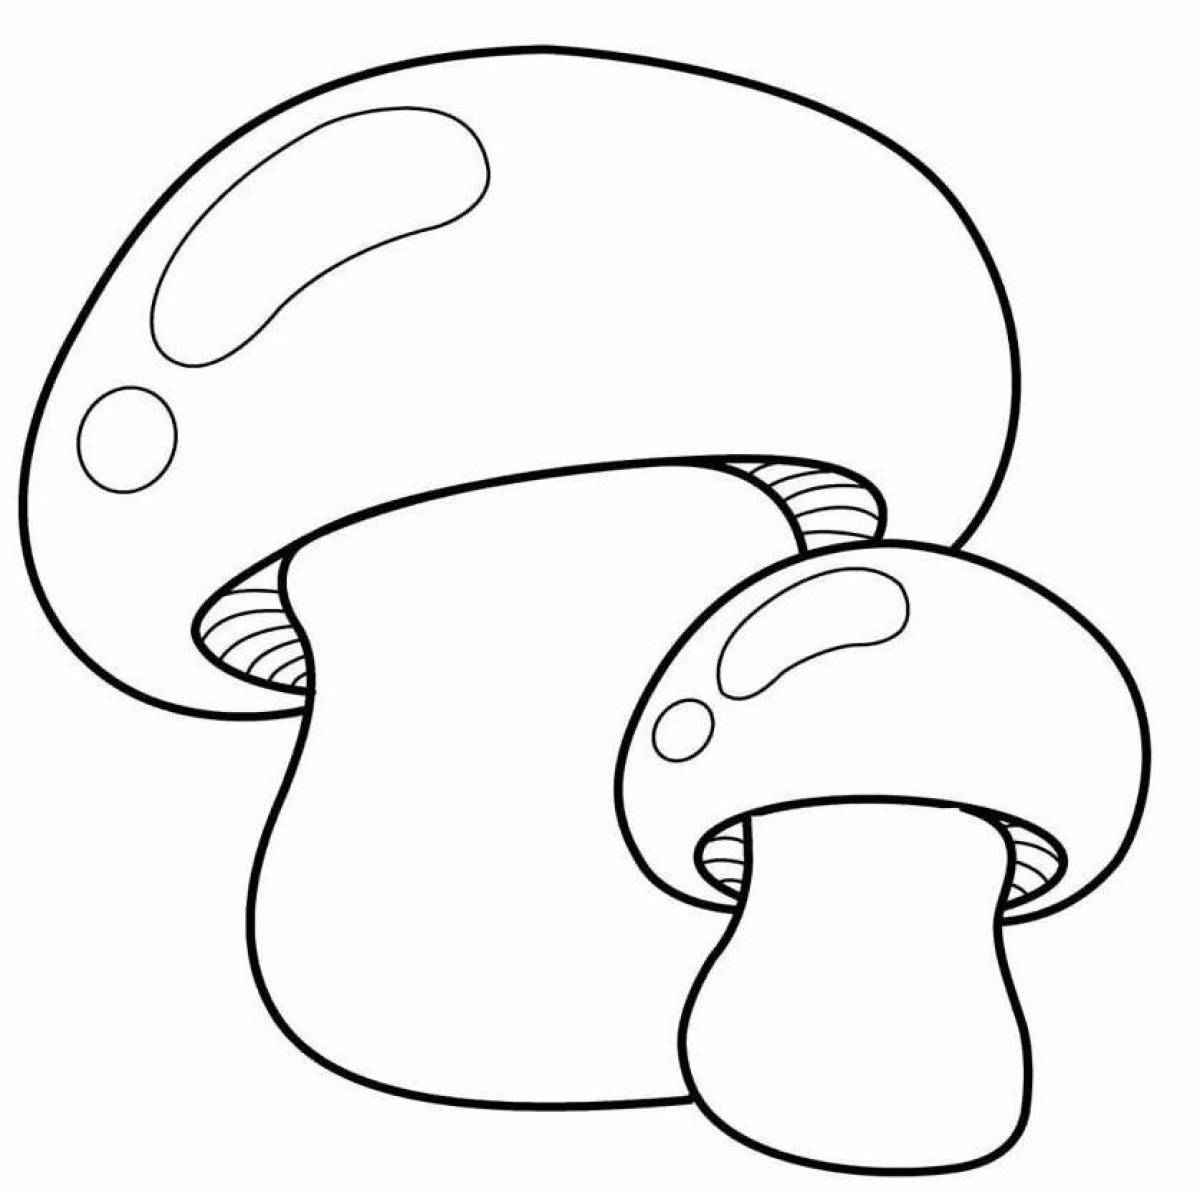 Раскраска гриб шампиньон